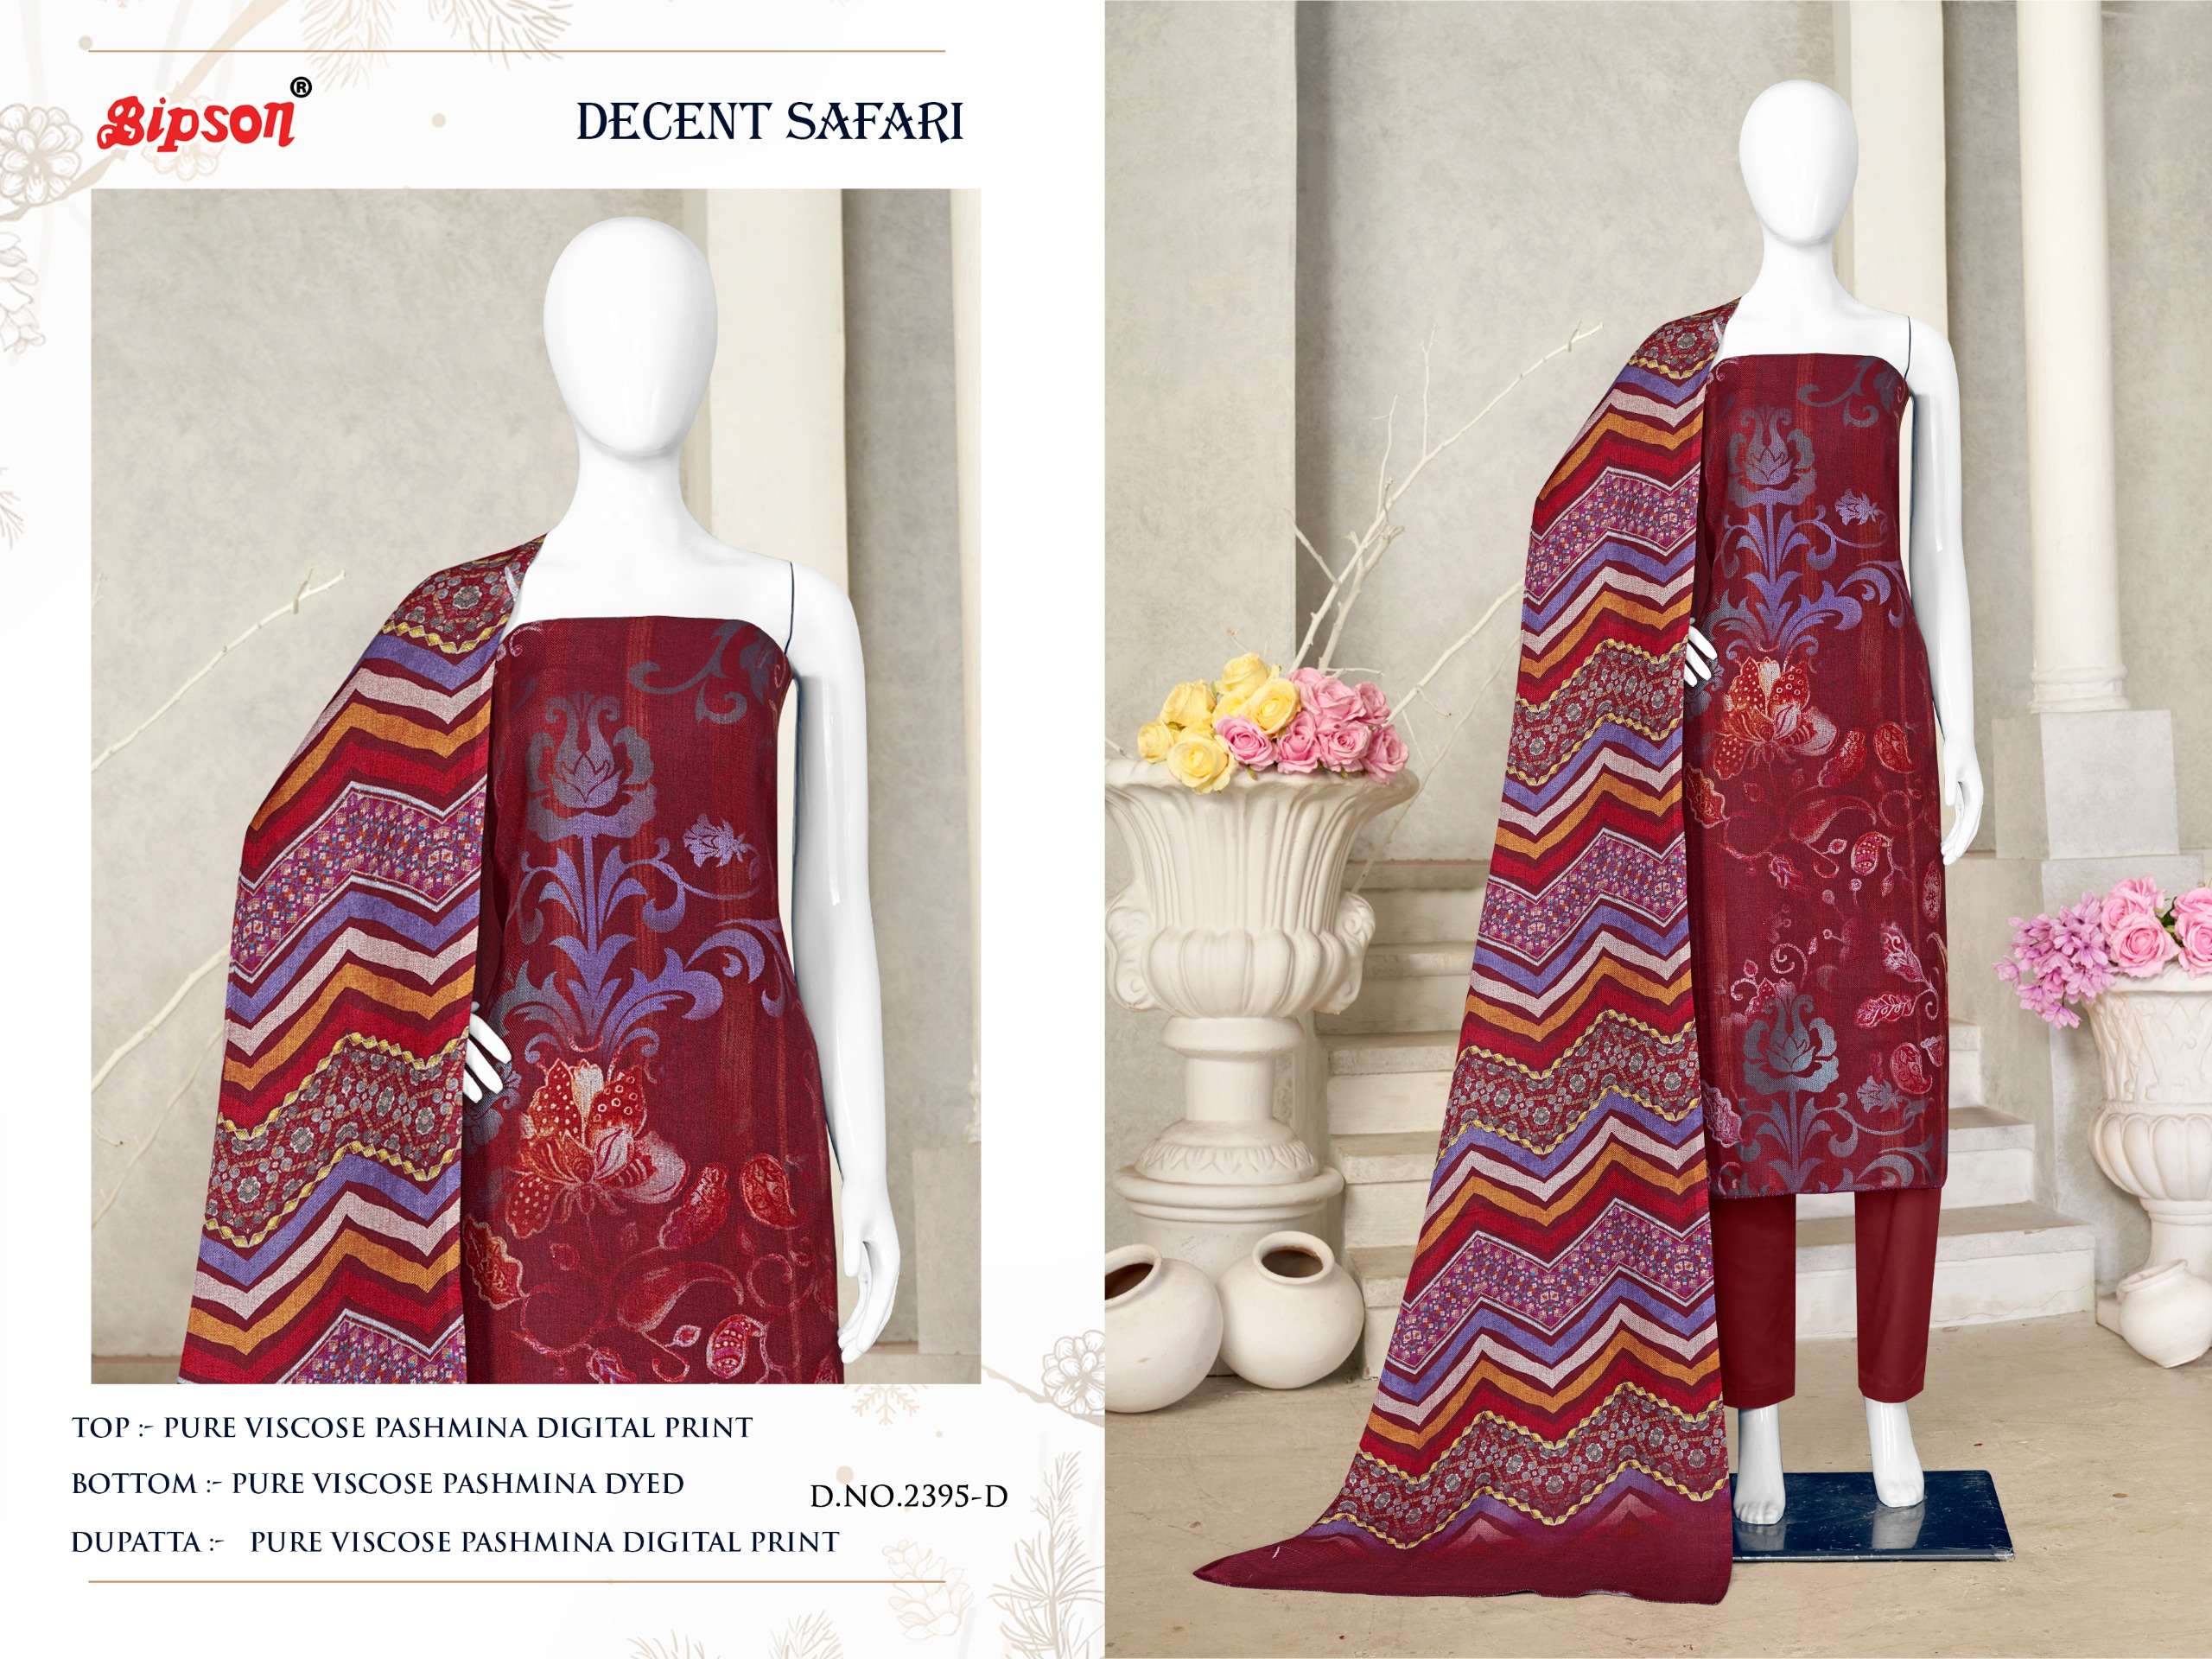 bipson decent safari 2395 colour series latest wedding wear pakistani salwar kameez wholesaler surat